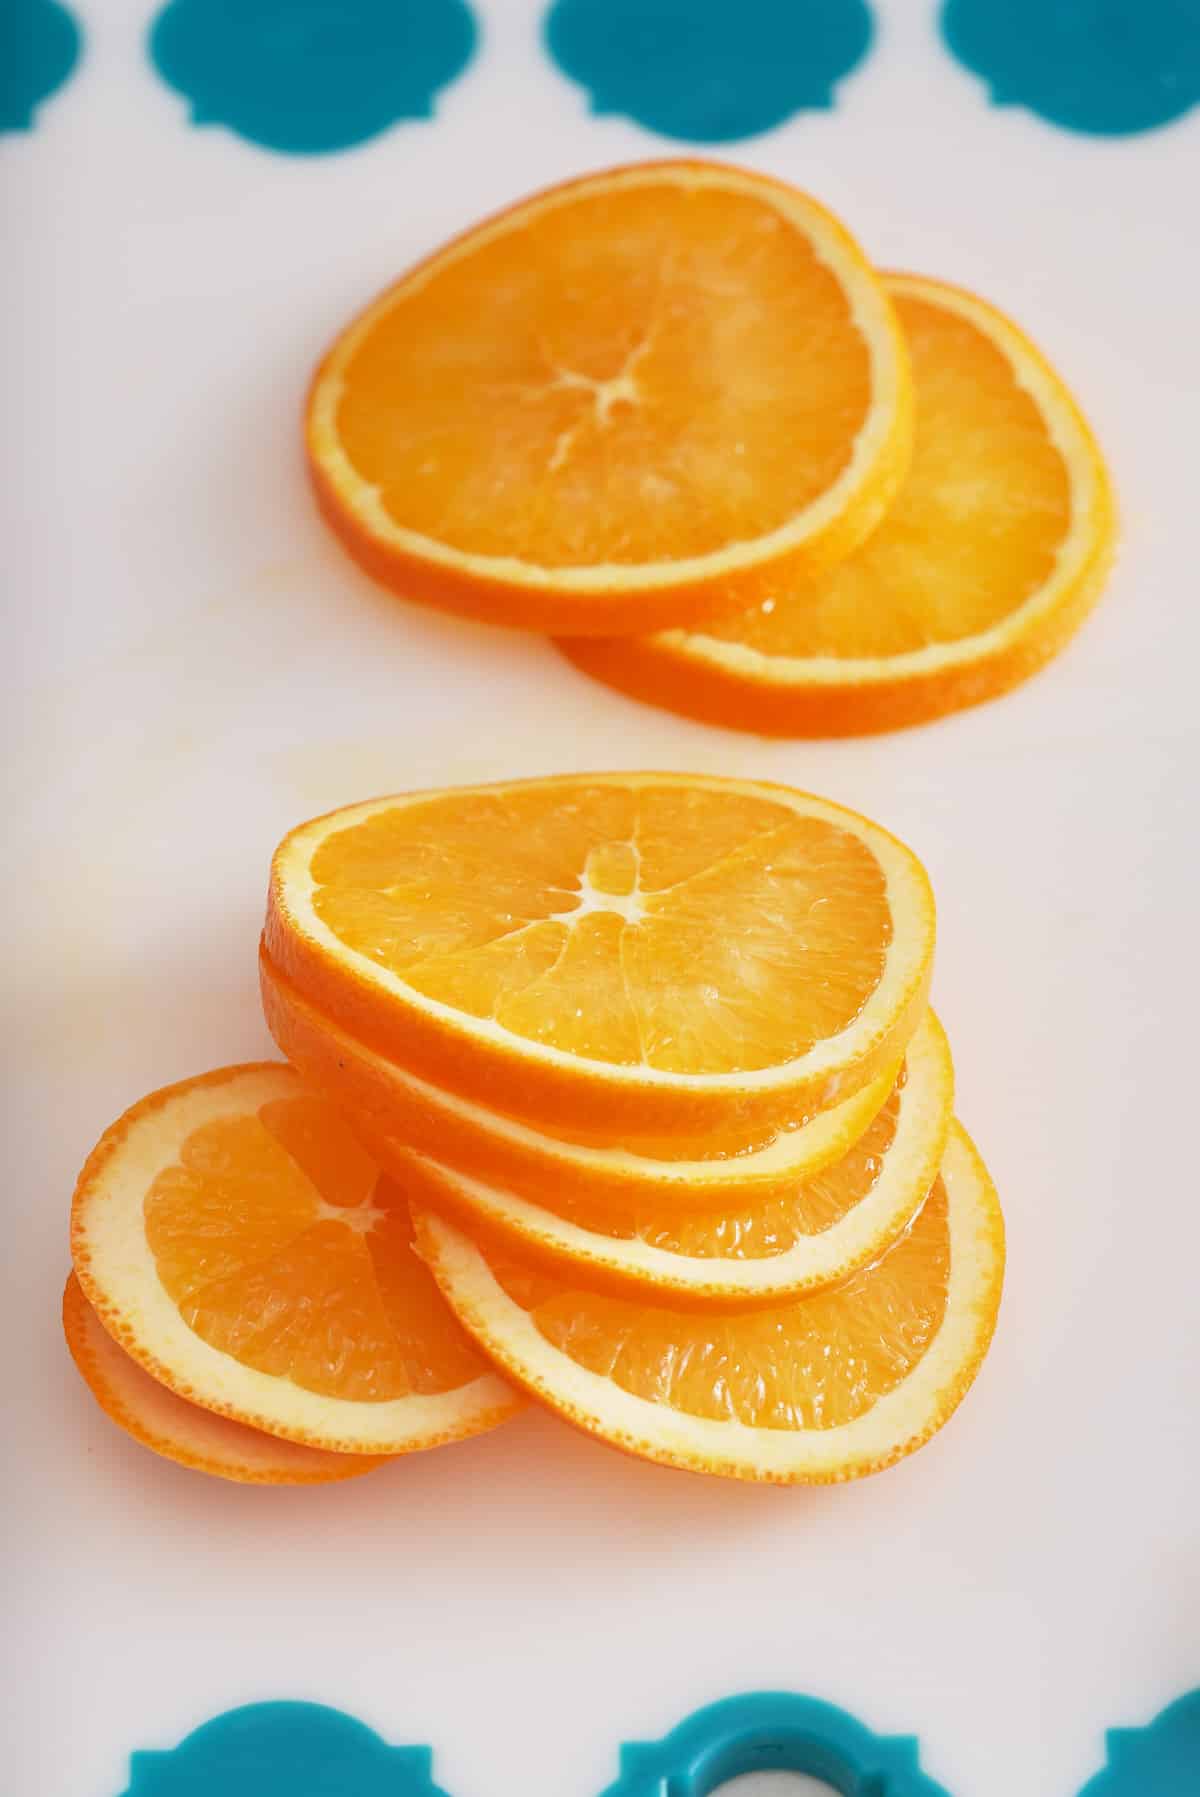 A whole orange sliced.